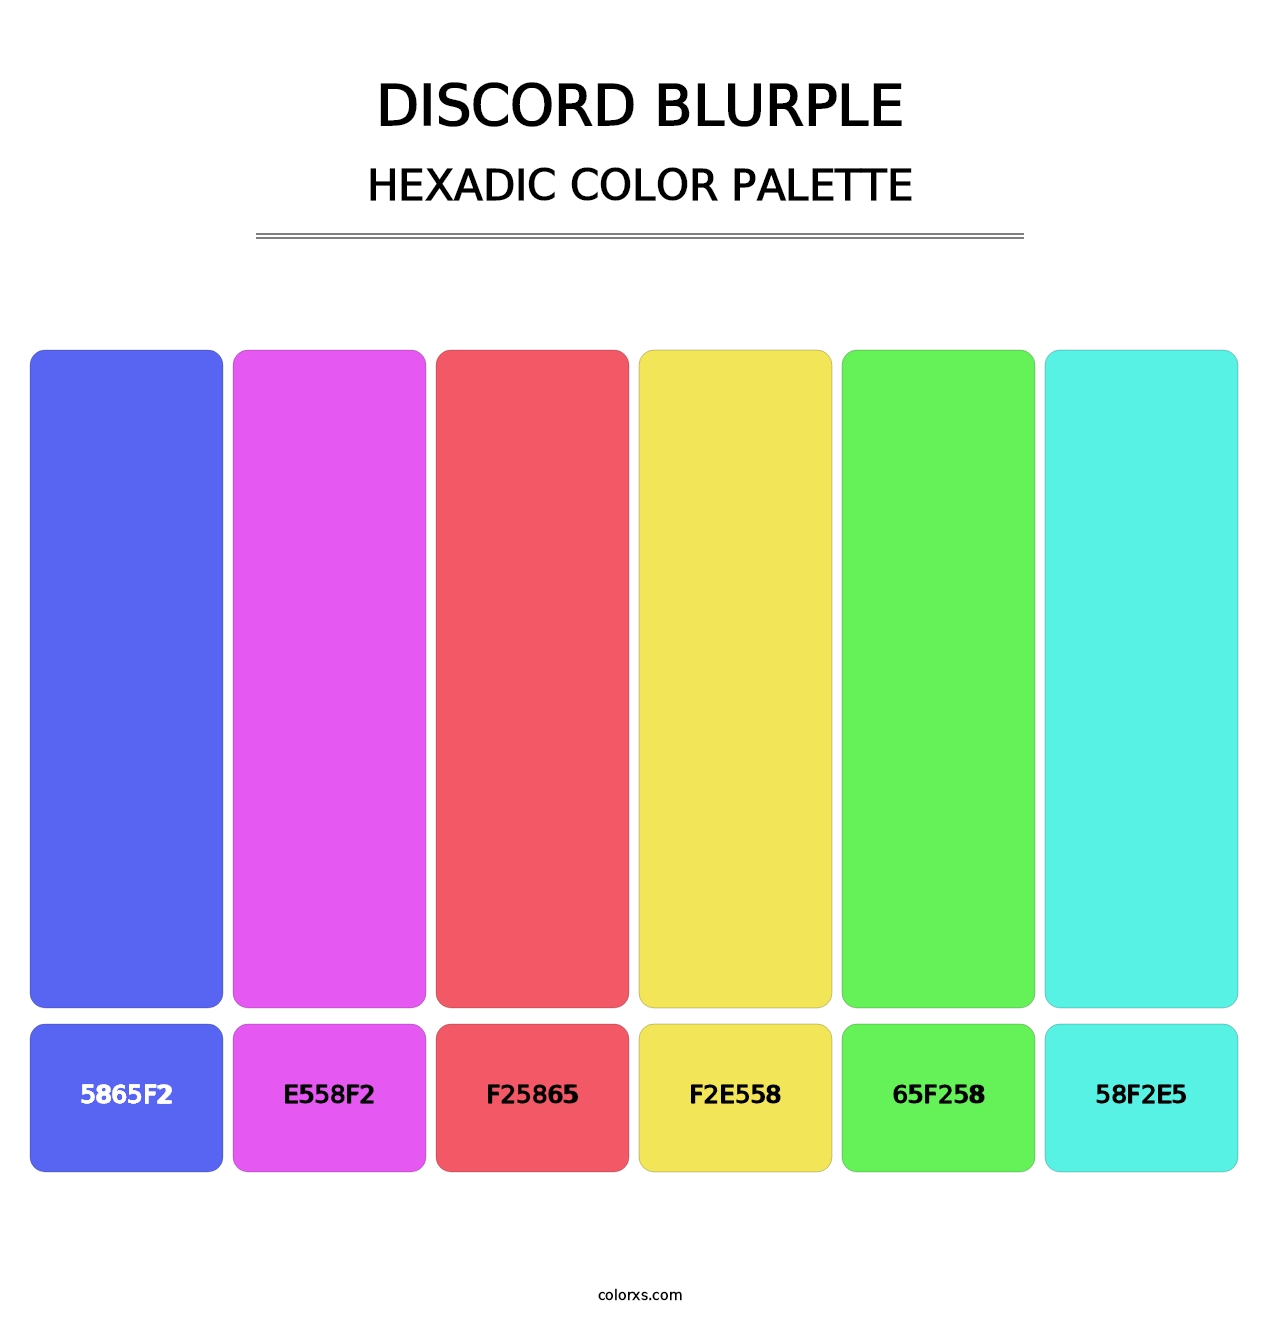 Discord Blurple - Hexadic Color Palette